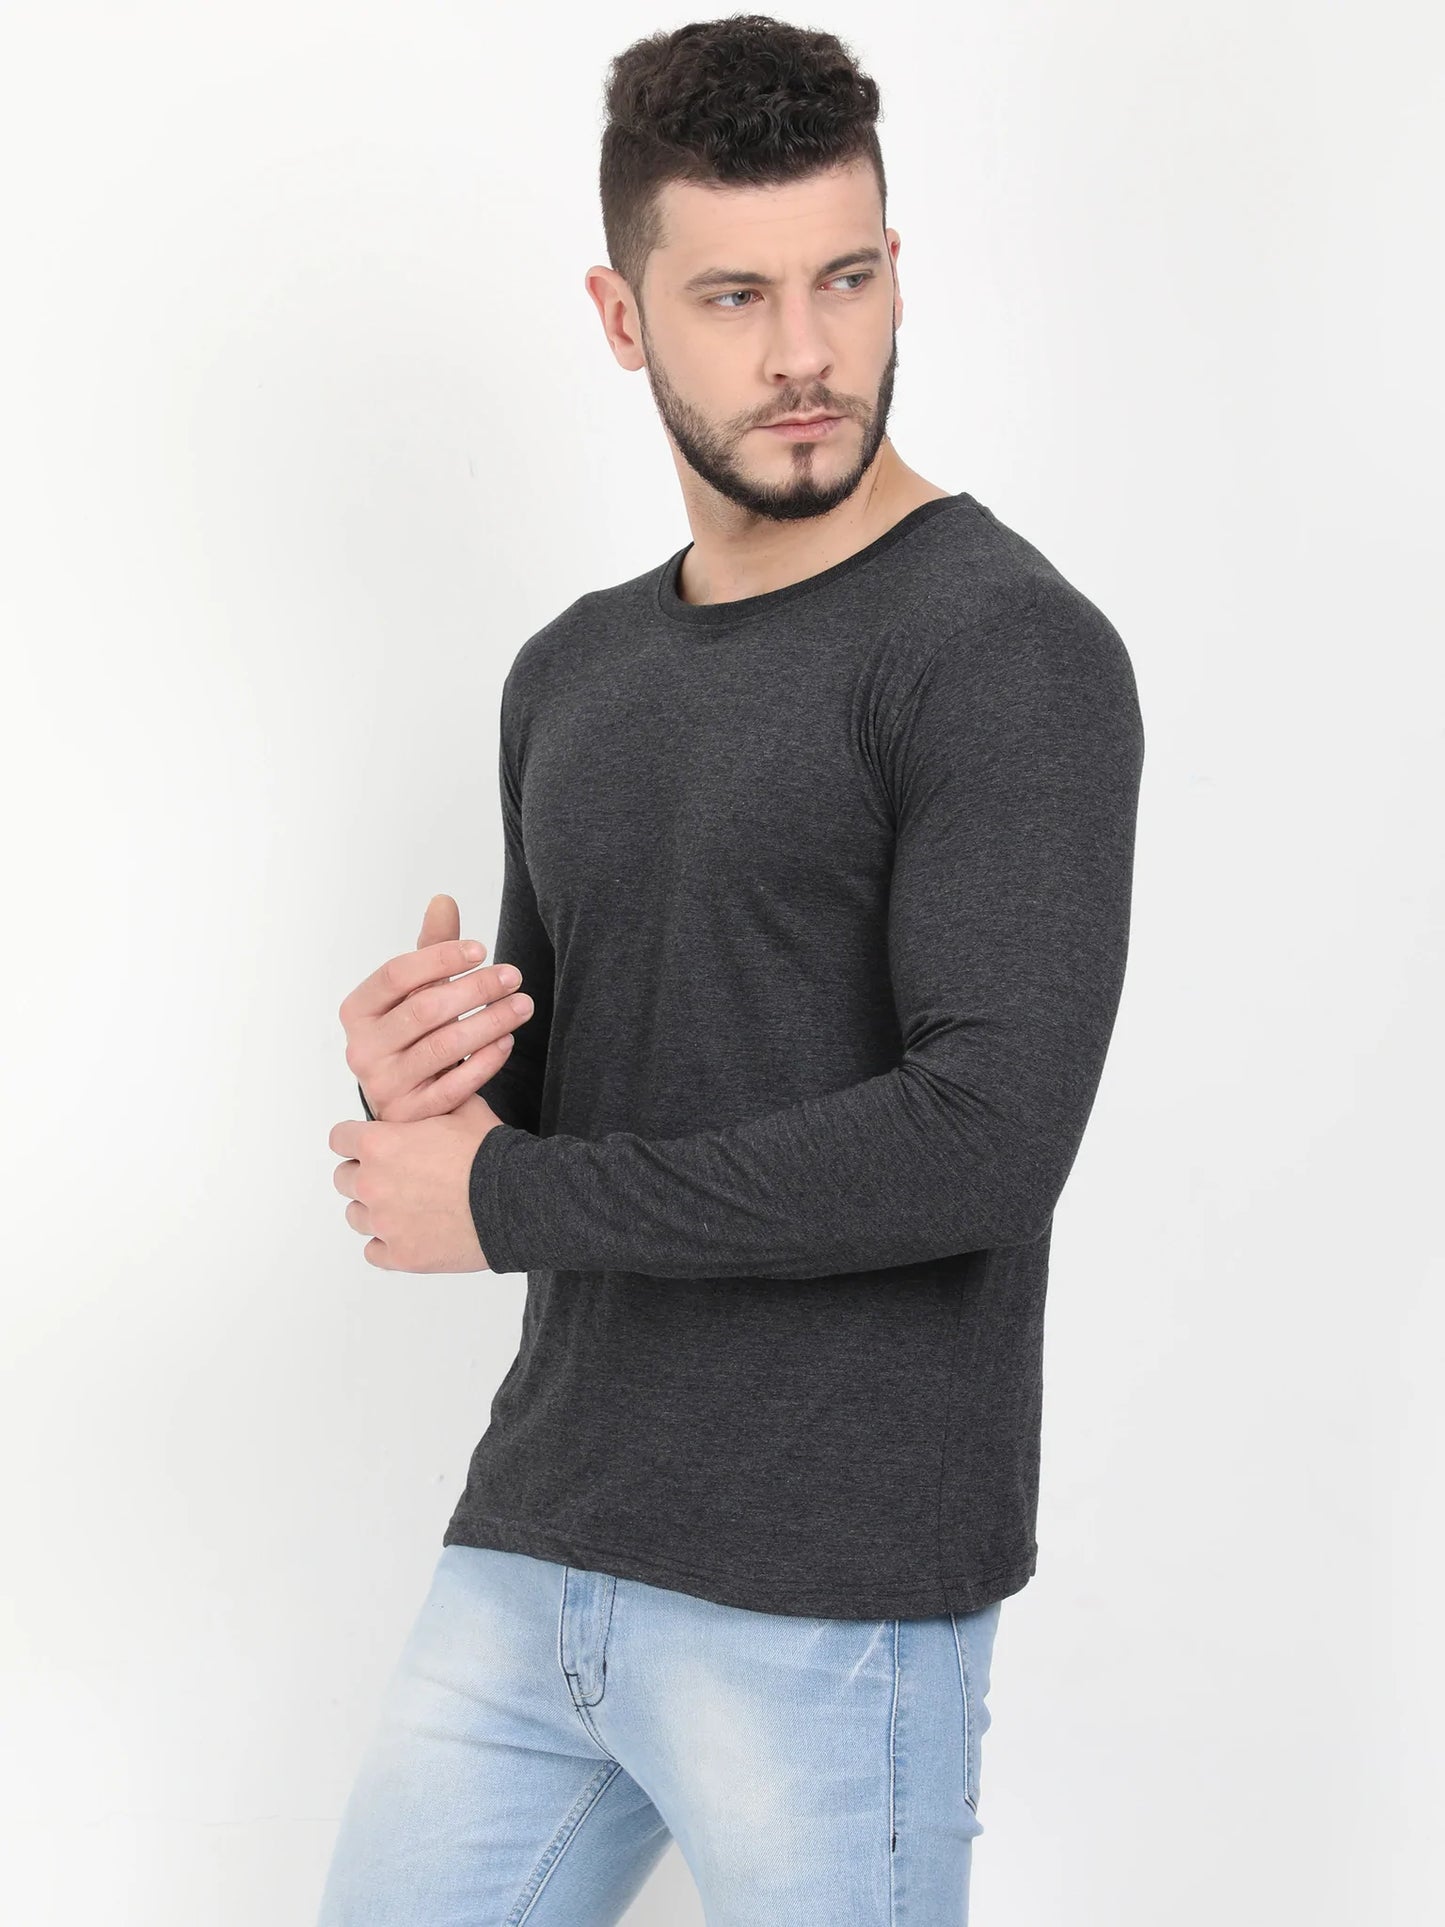 Men's Cotton Plain Round Neck Full Sleeve Charcoal Melange Color T-Shirt